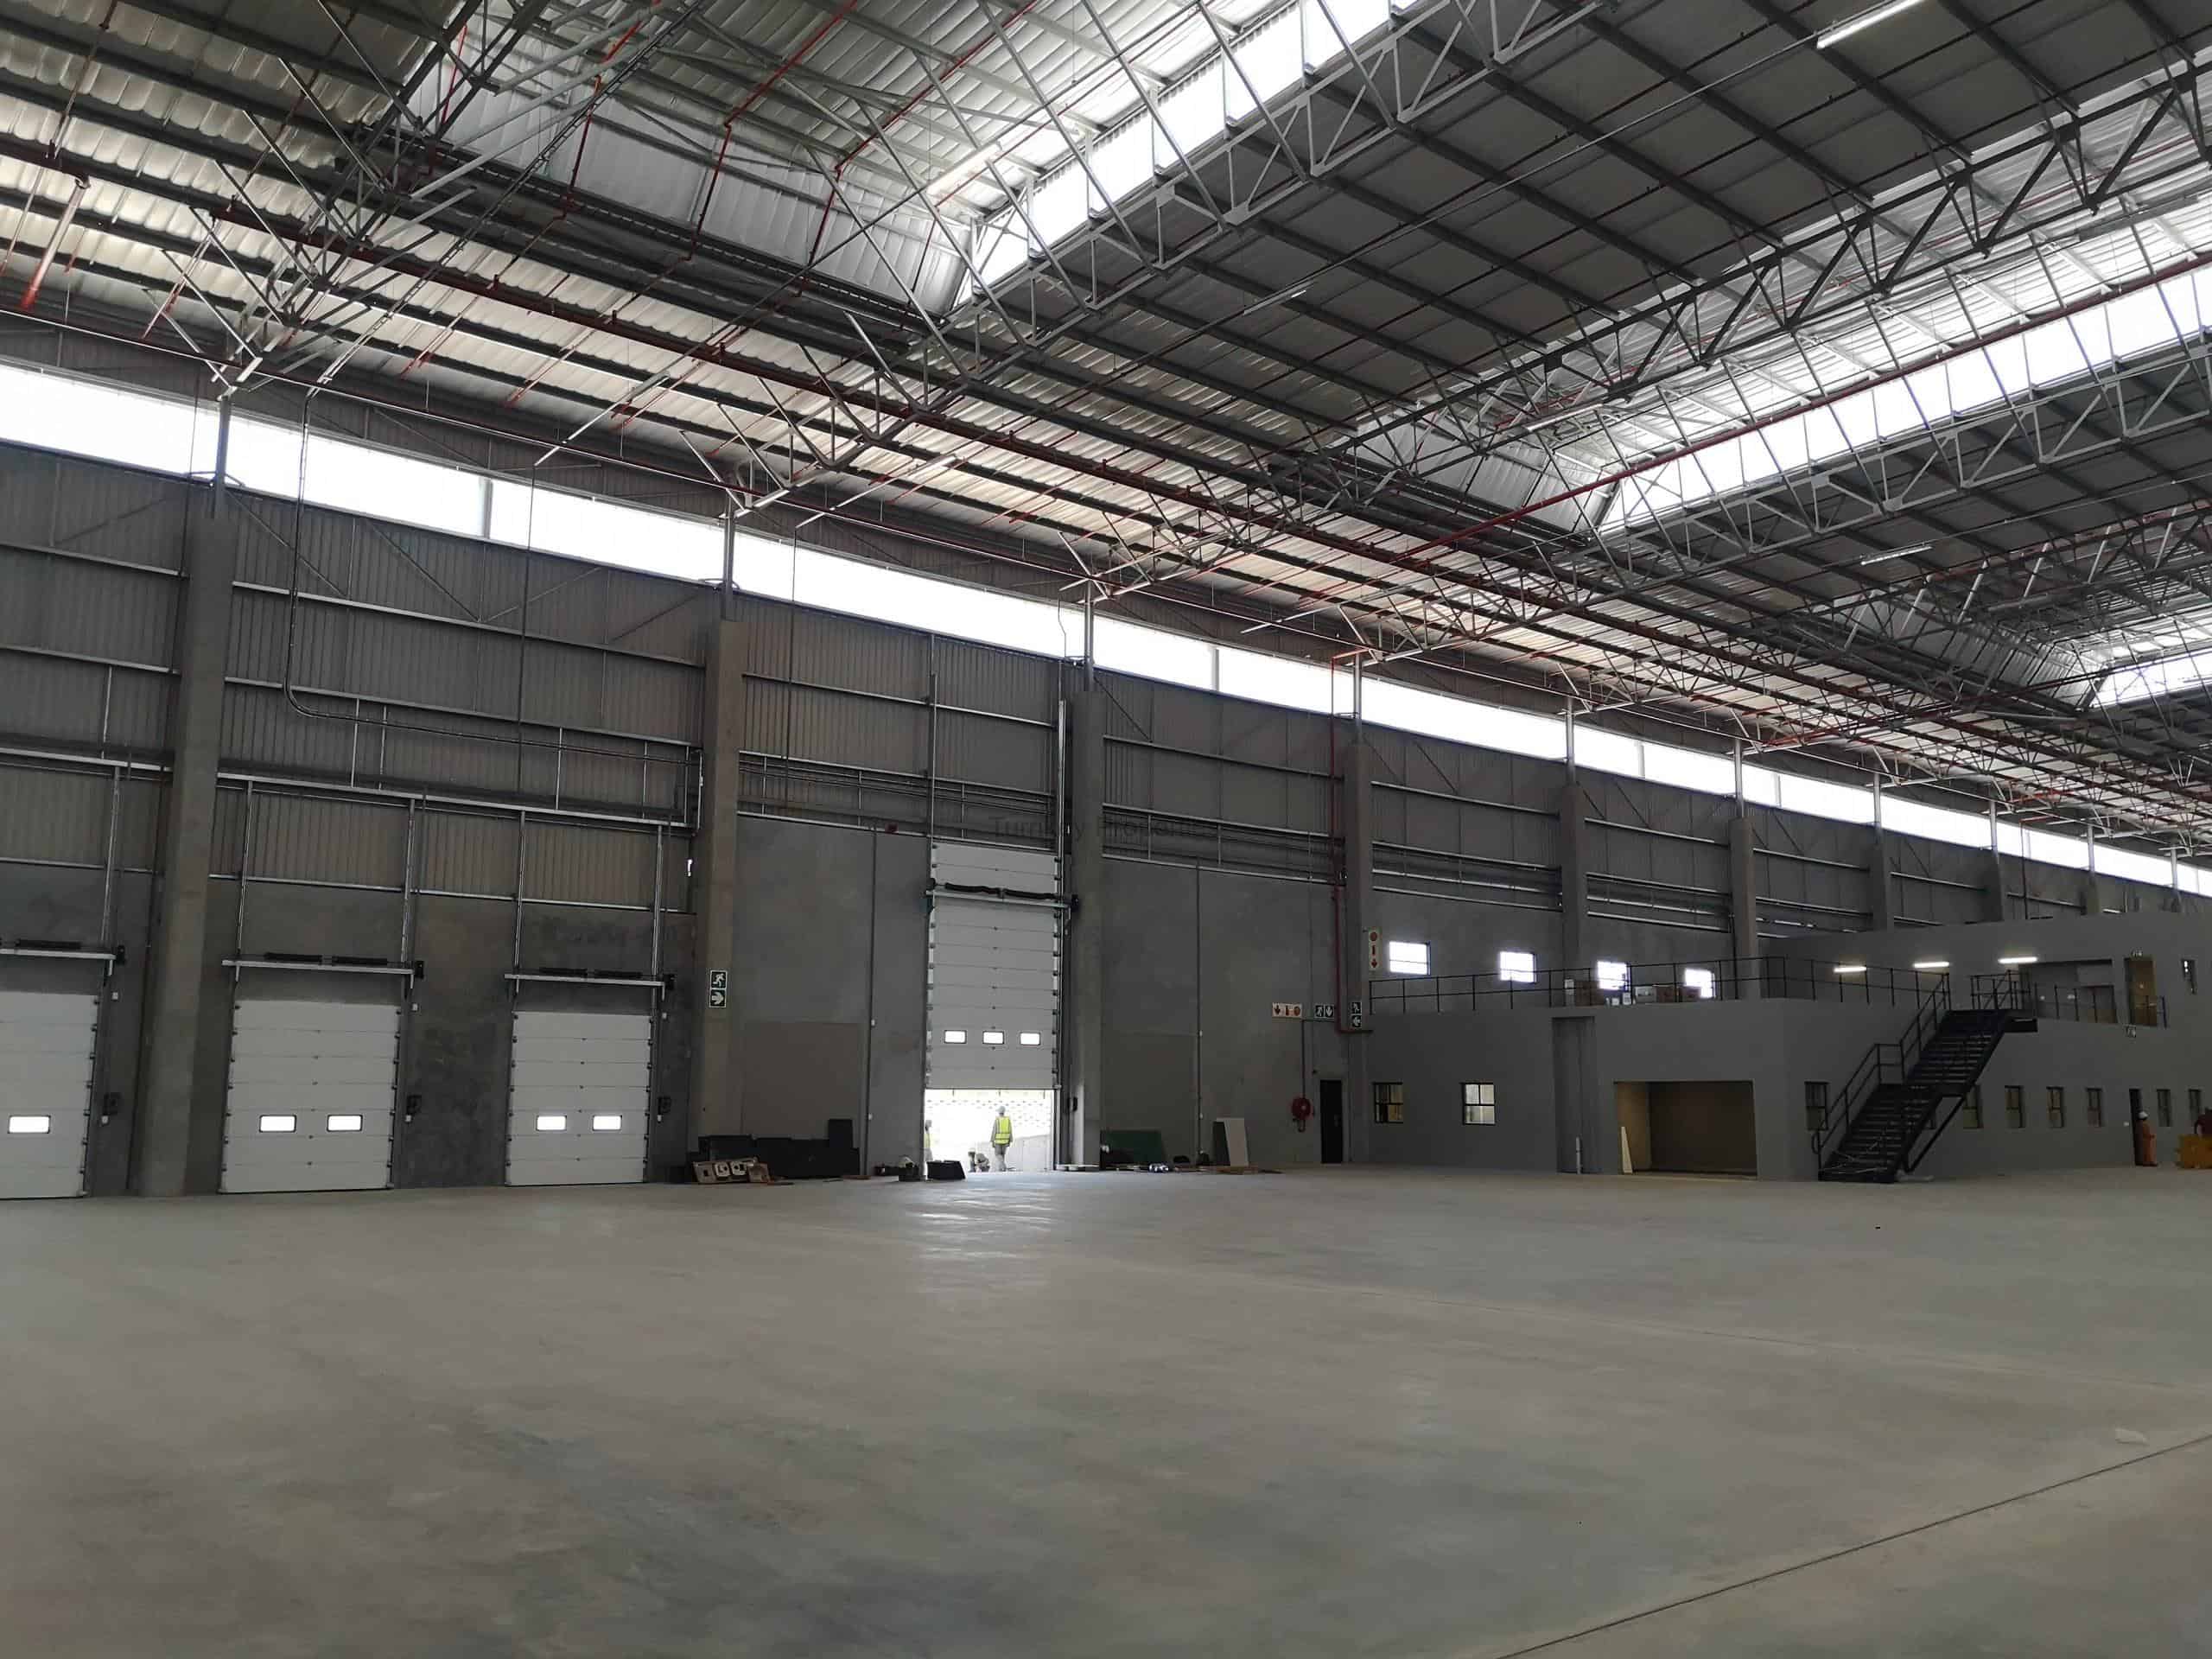 24148m² Warehouse Space to Rent Longlake Longlake Logistics Park